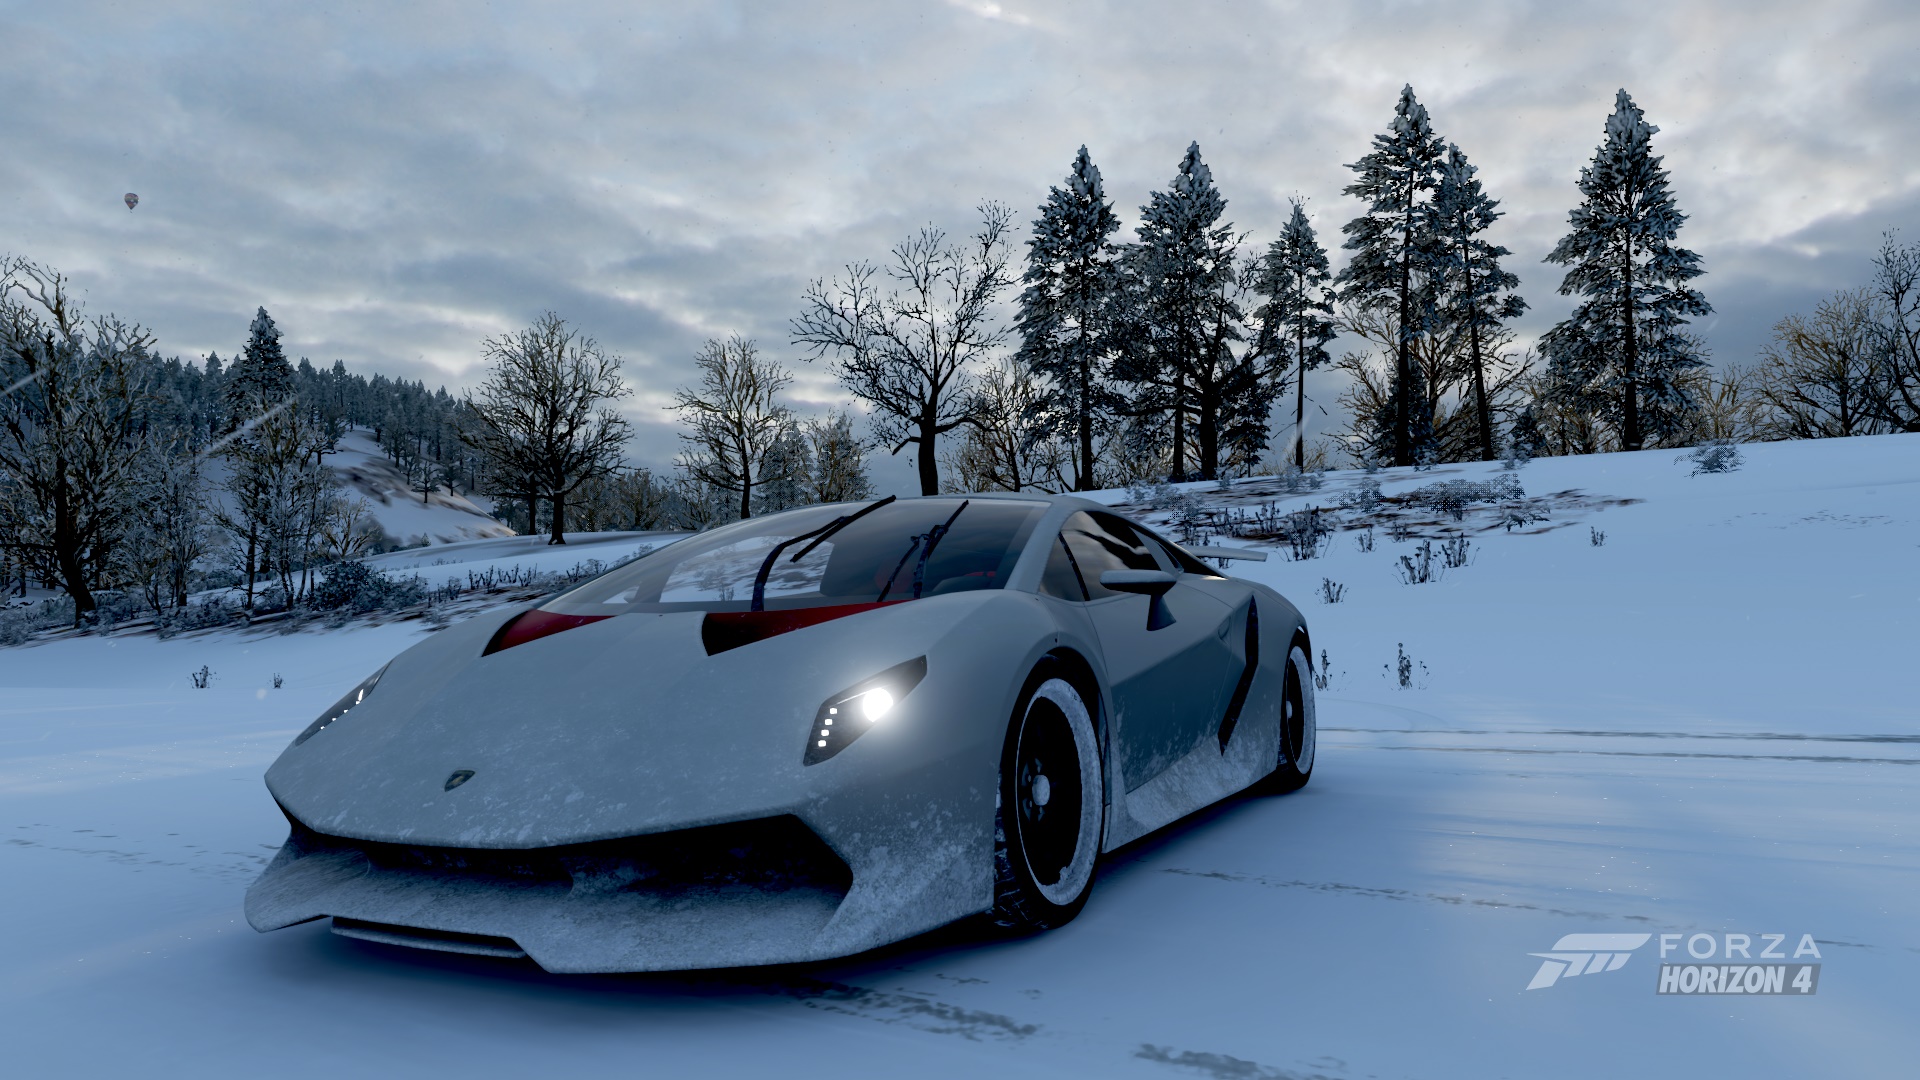 Lamborghini Lamborghini Sesto Elemento Forza Horizon 4 Winter Snow Racing White Ice 1920x1080